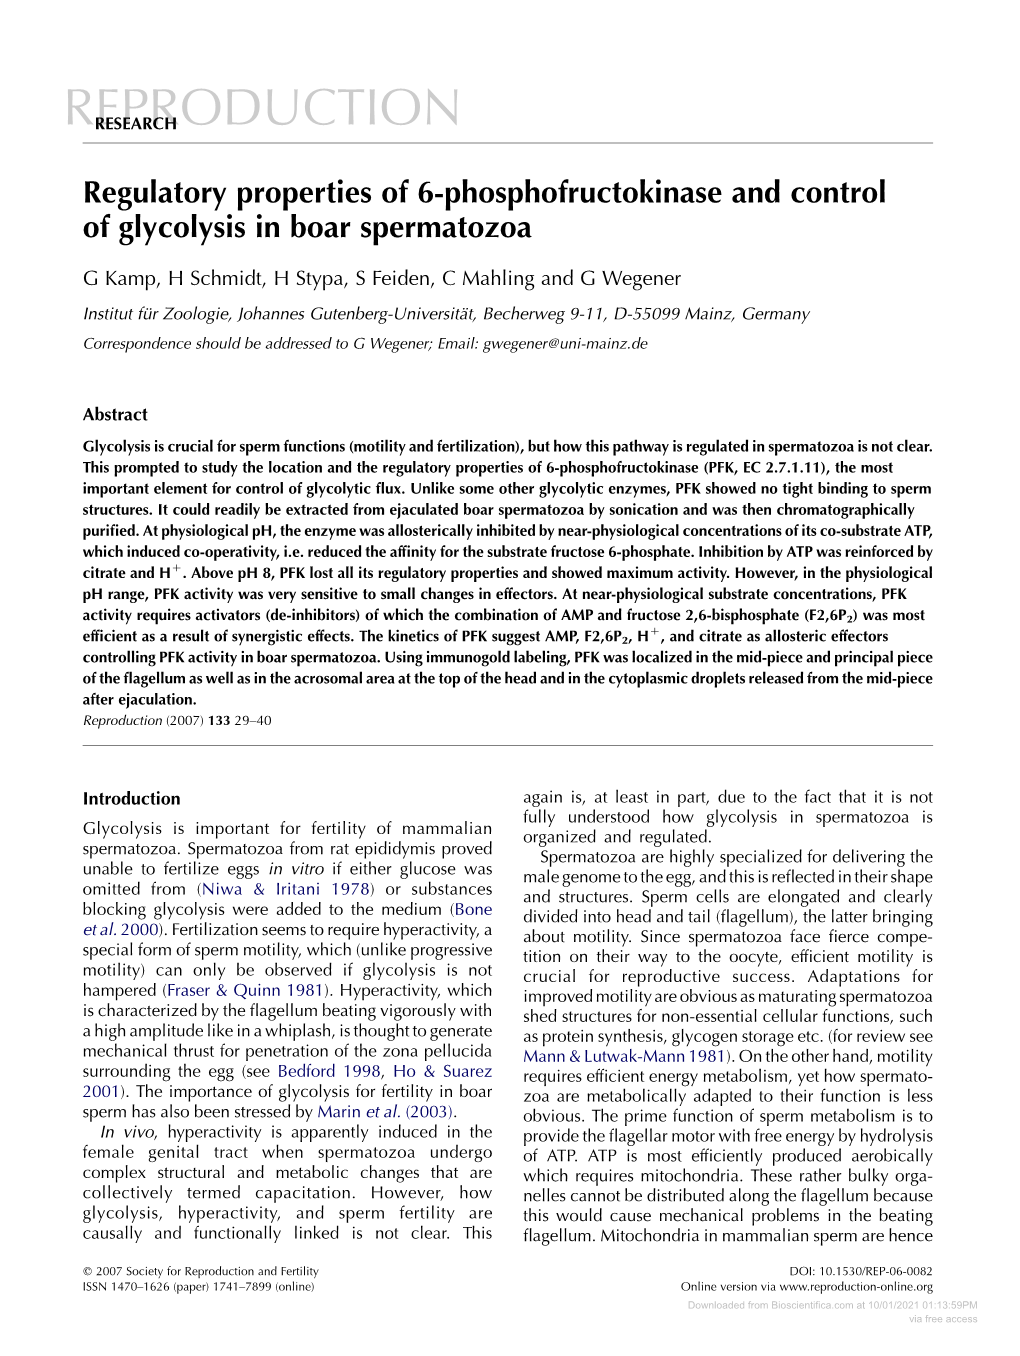 Regulatory Properties of 6-Phosphofructokinase and Control of Glycolysis in Boar Spermatozoa